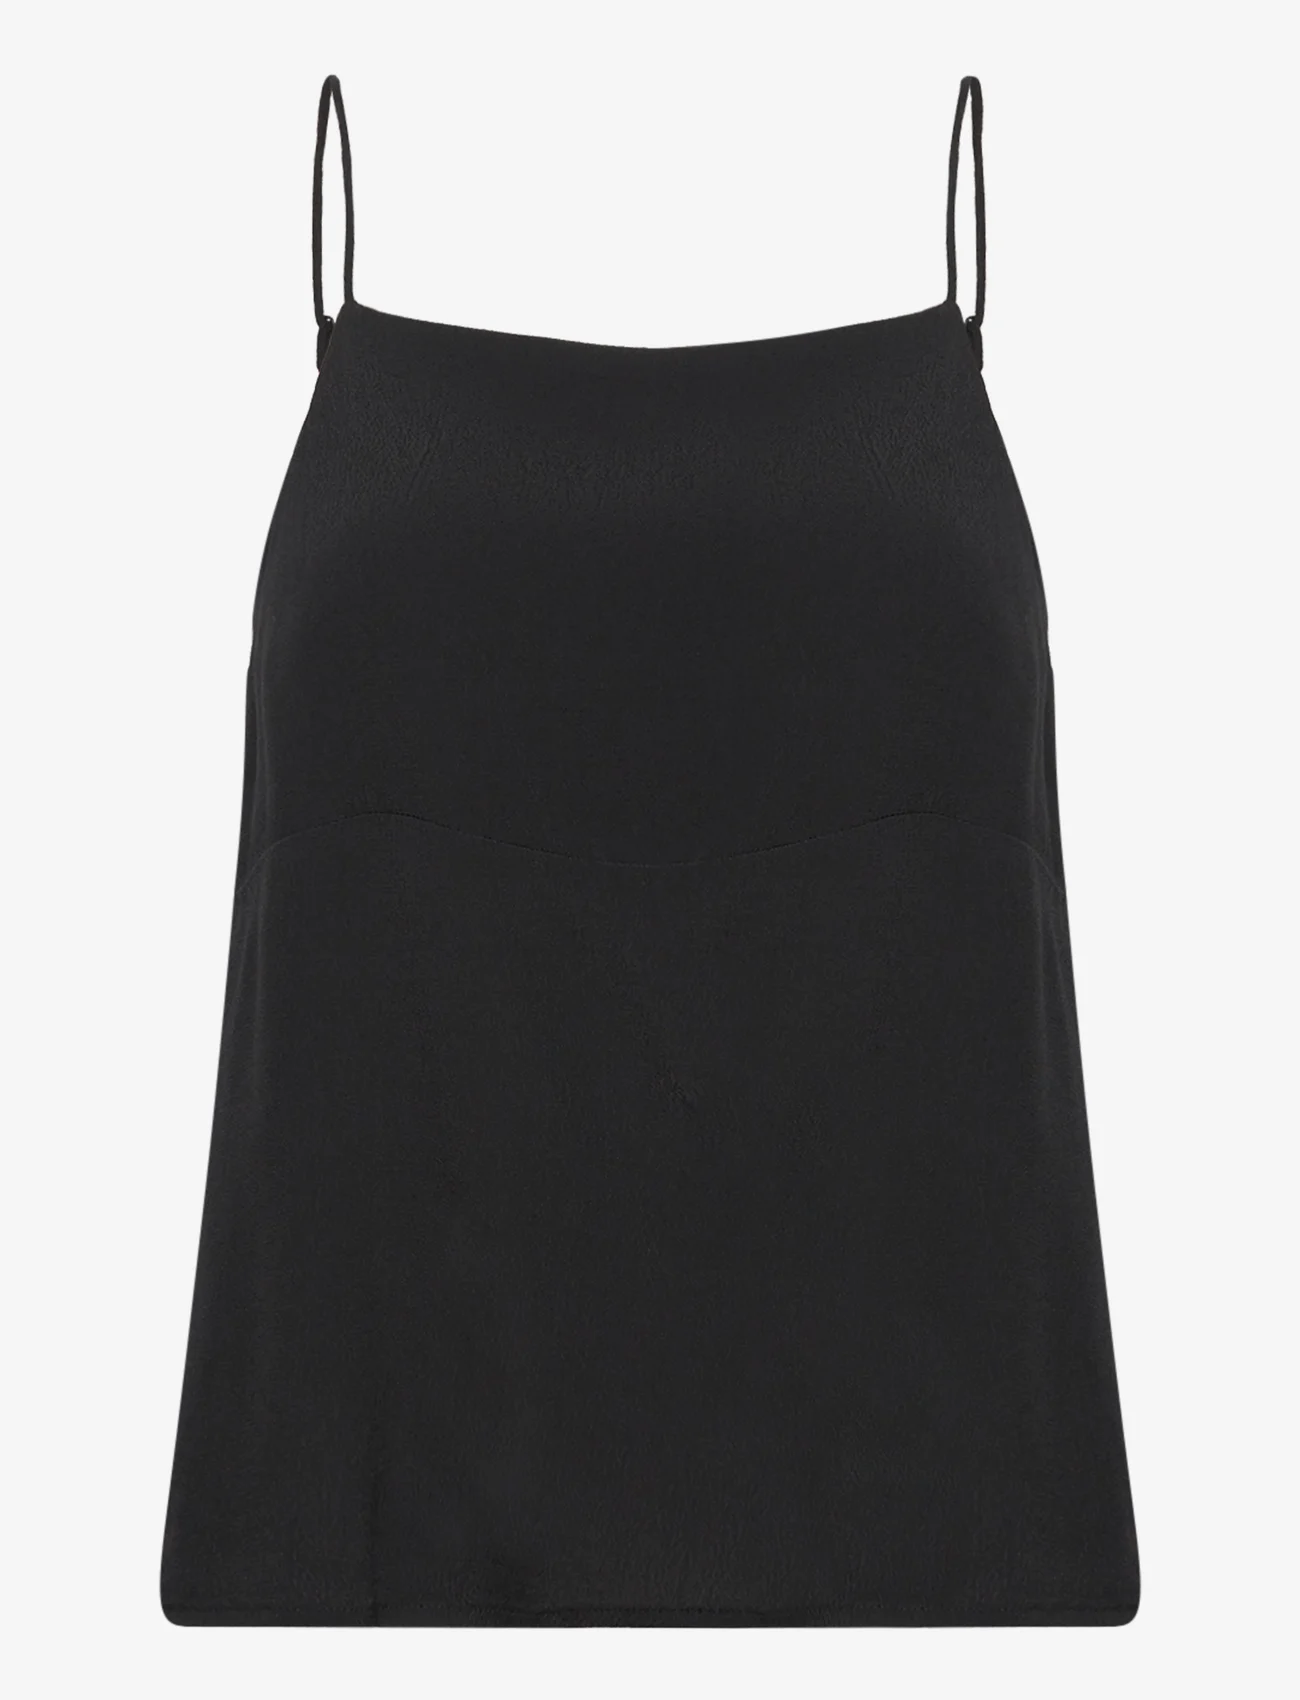 Bruuns Bazaar - LillyBBAra top - sleeveless blouses - black - 0